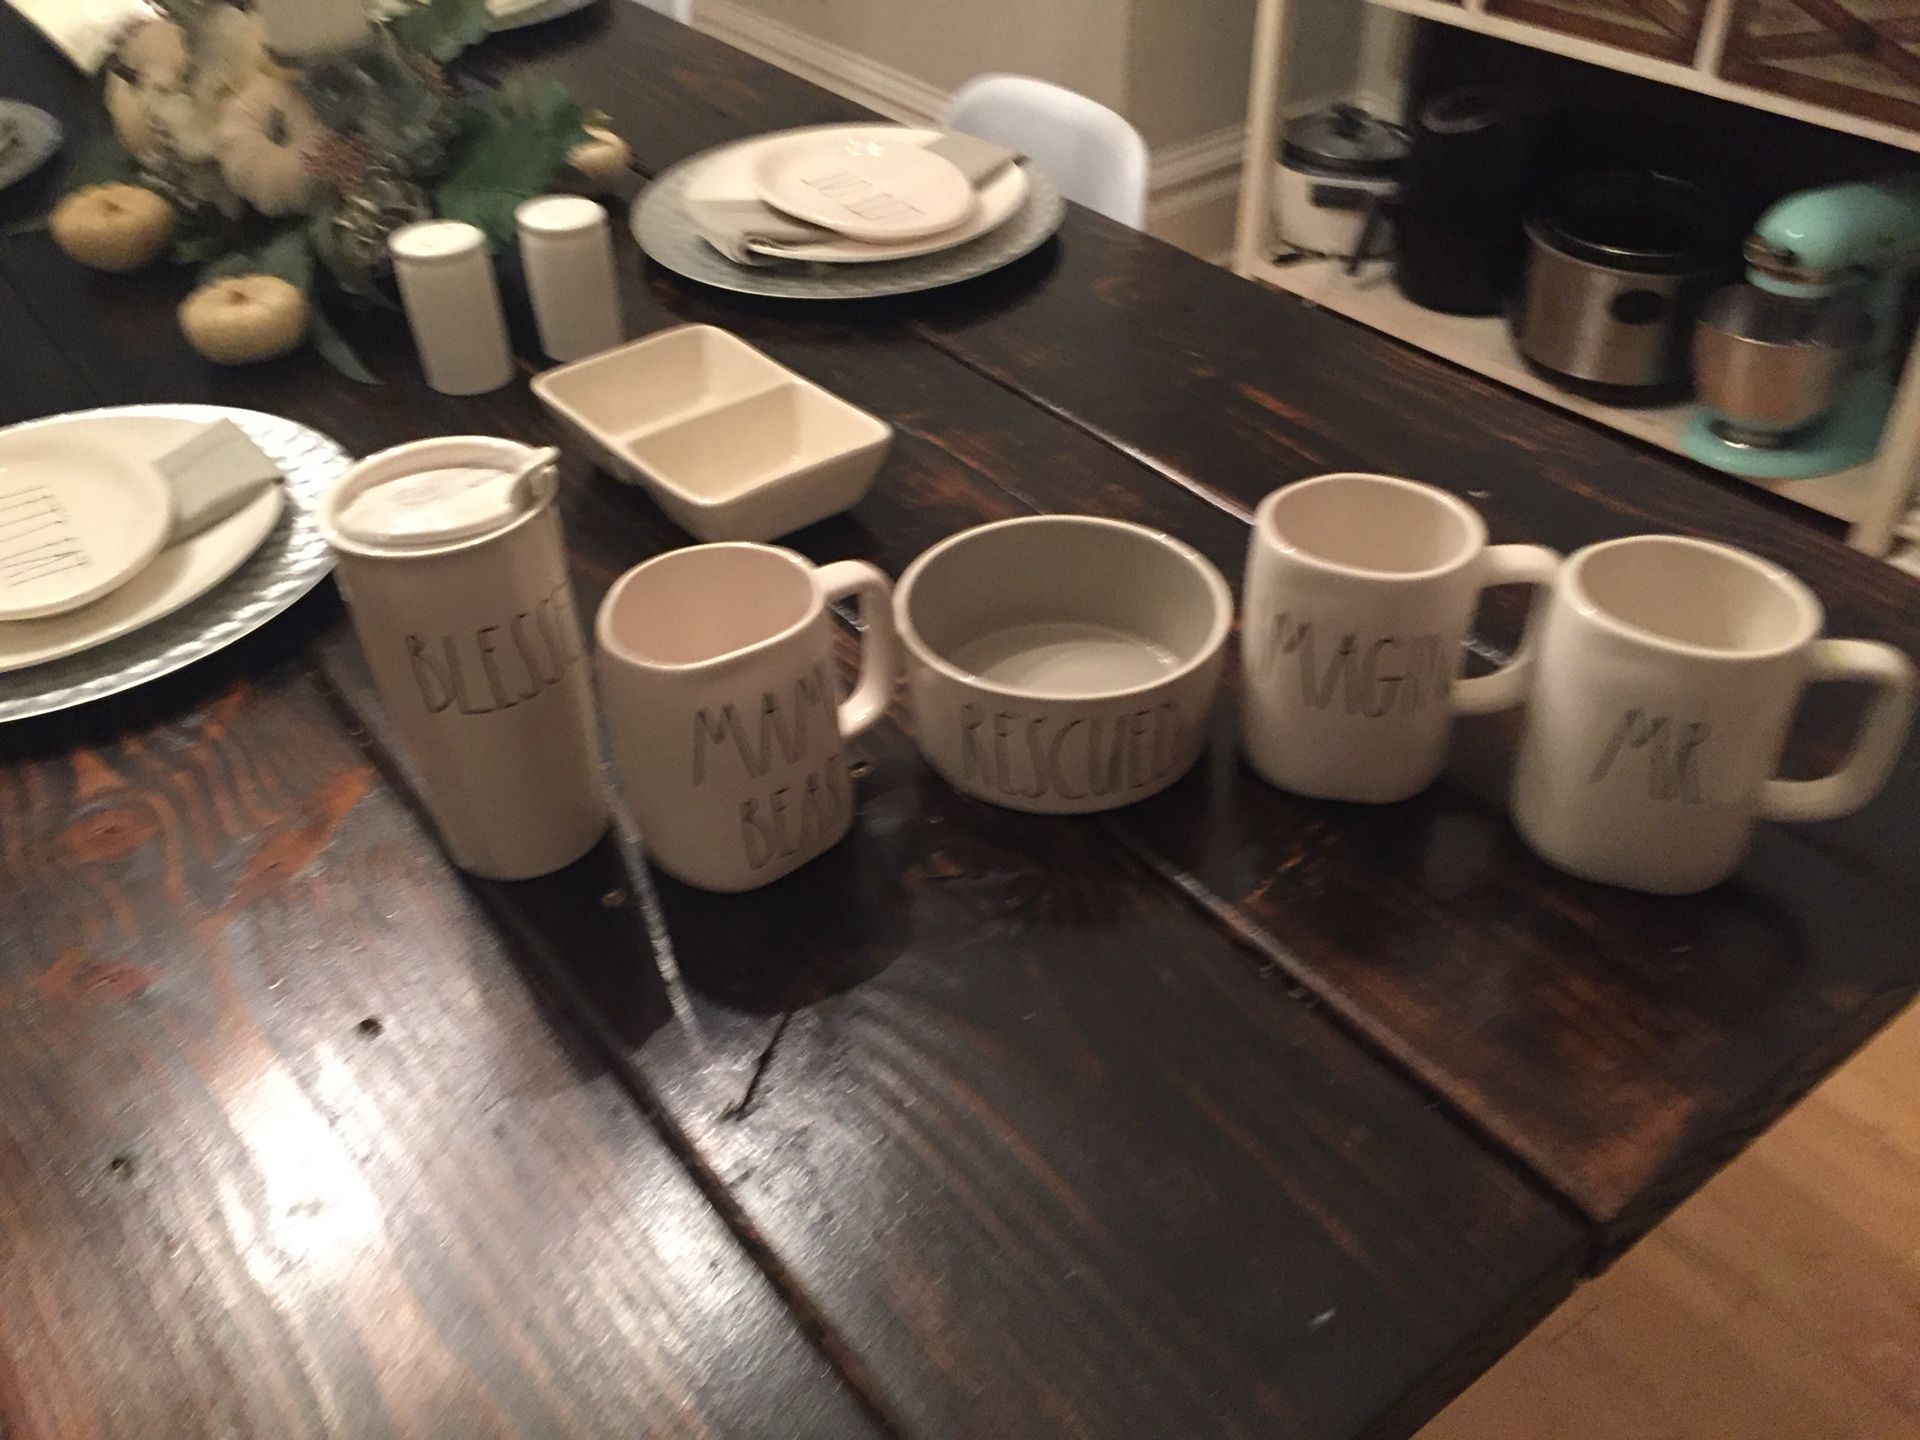 Rae Dunn NWT mugs, dog bowl, etc